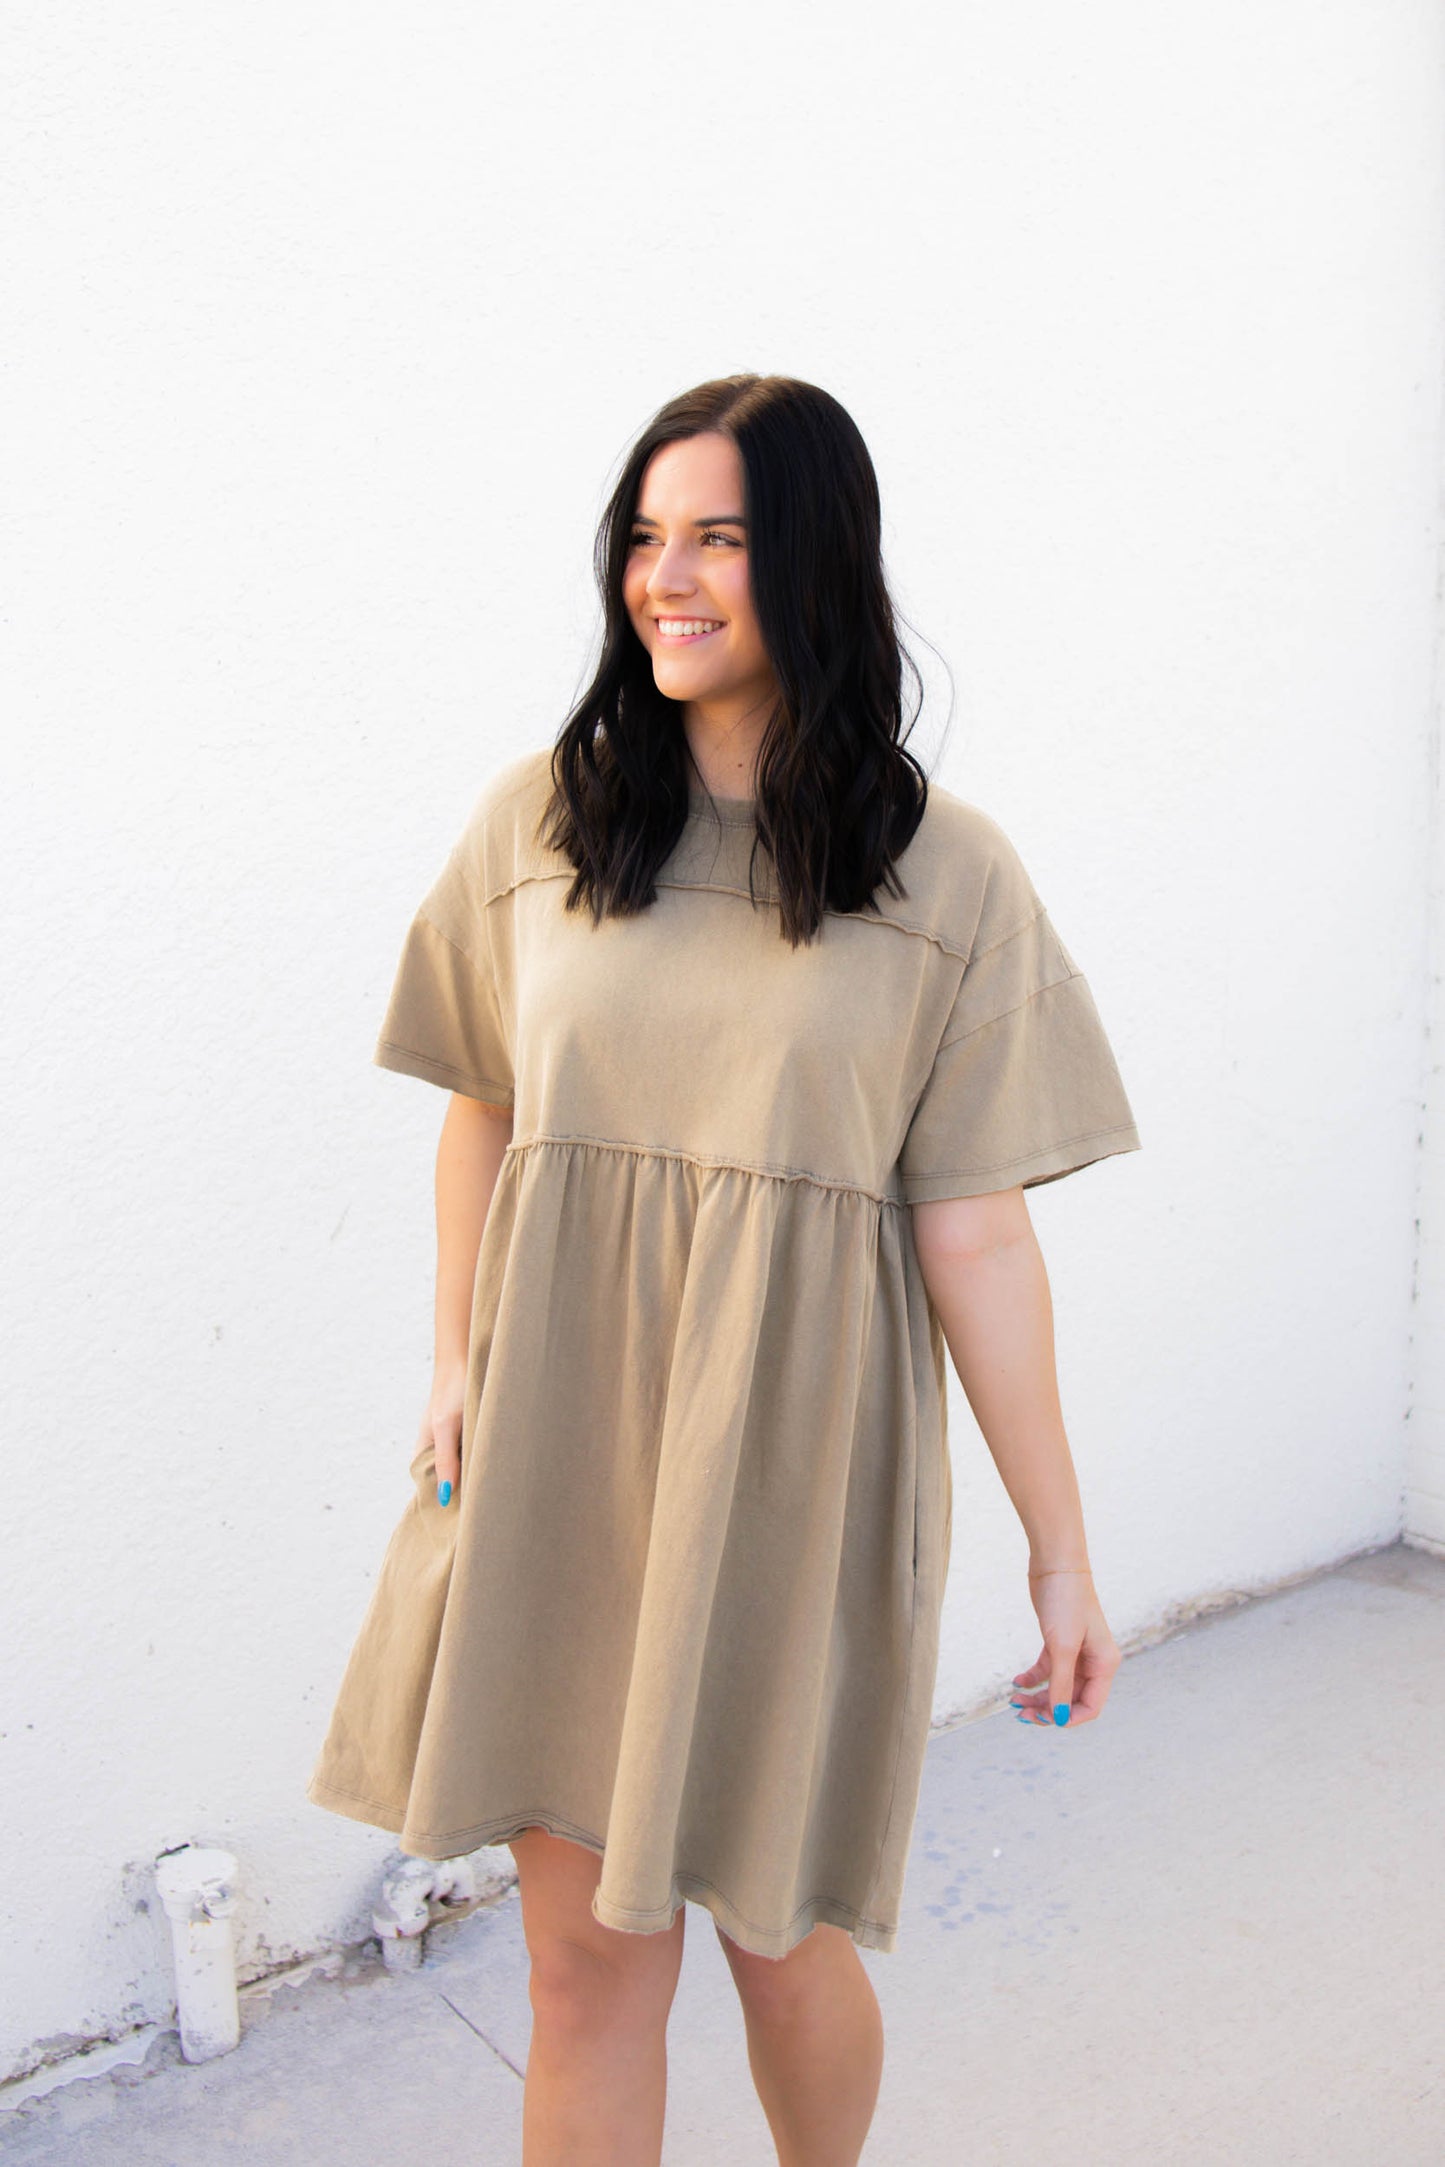 Kenzie Mineral Wash T-Shirt Dress | Olive Grey